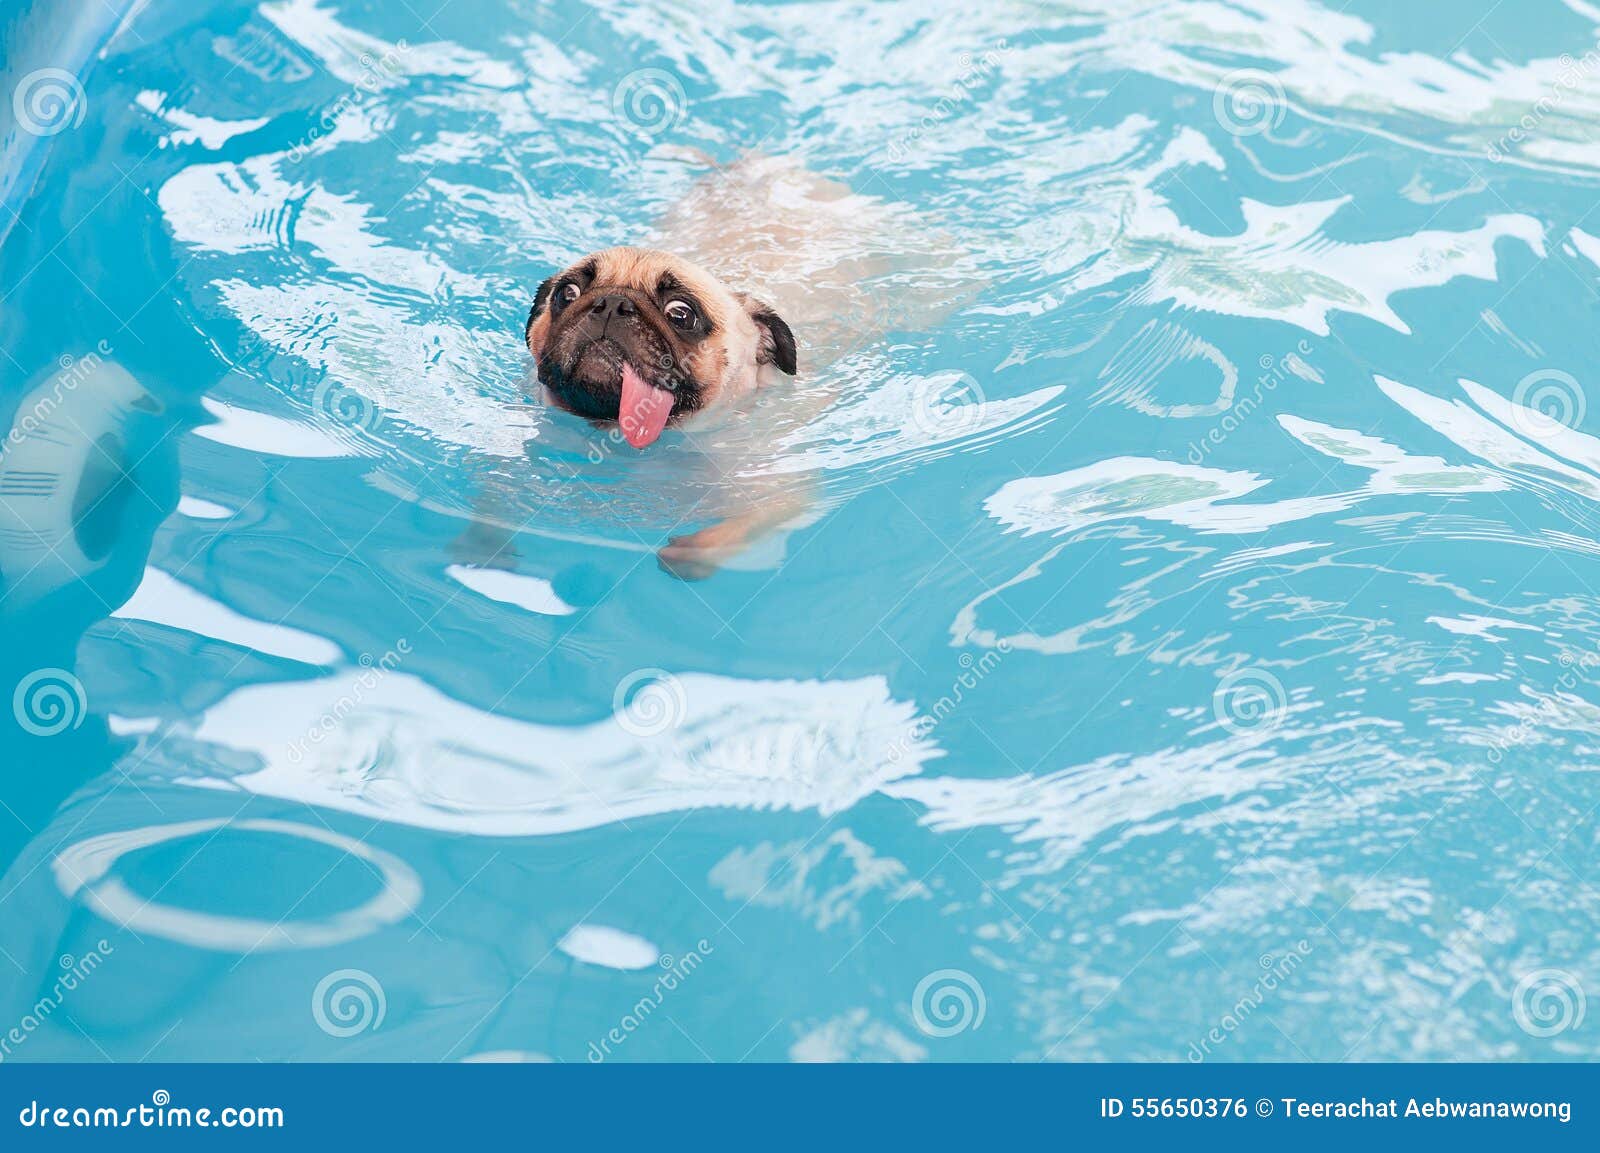 a cute dog pug swim at a local public pool with tongue